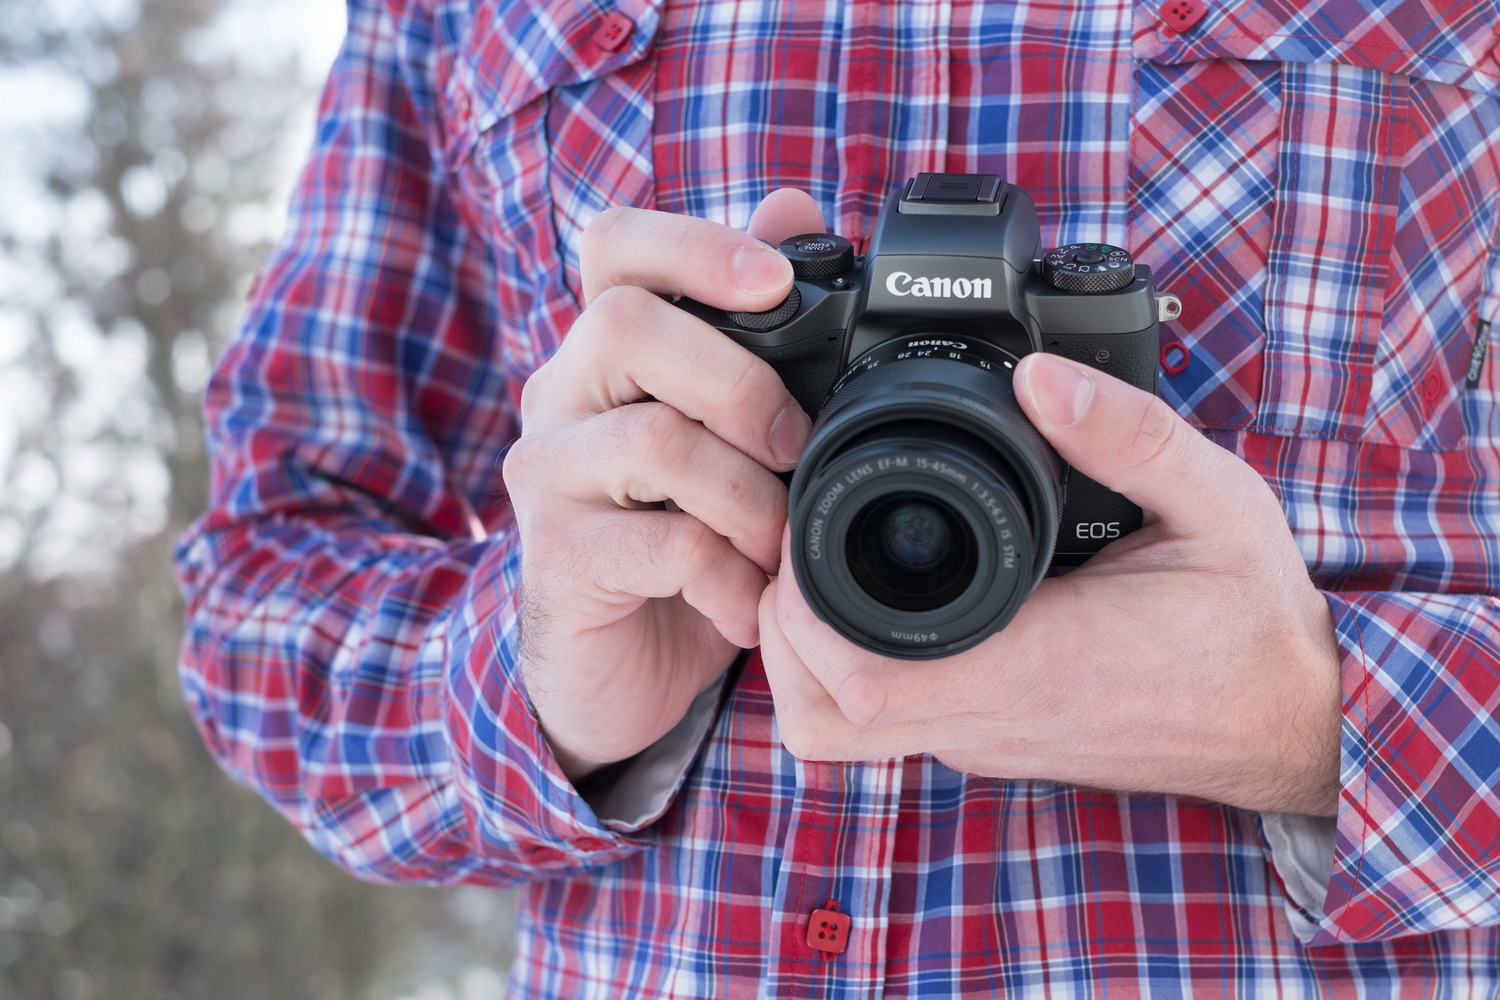 Canon EOS M5 Review: Canon finally made a serious mirrorless